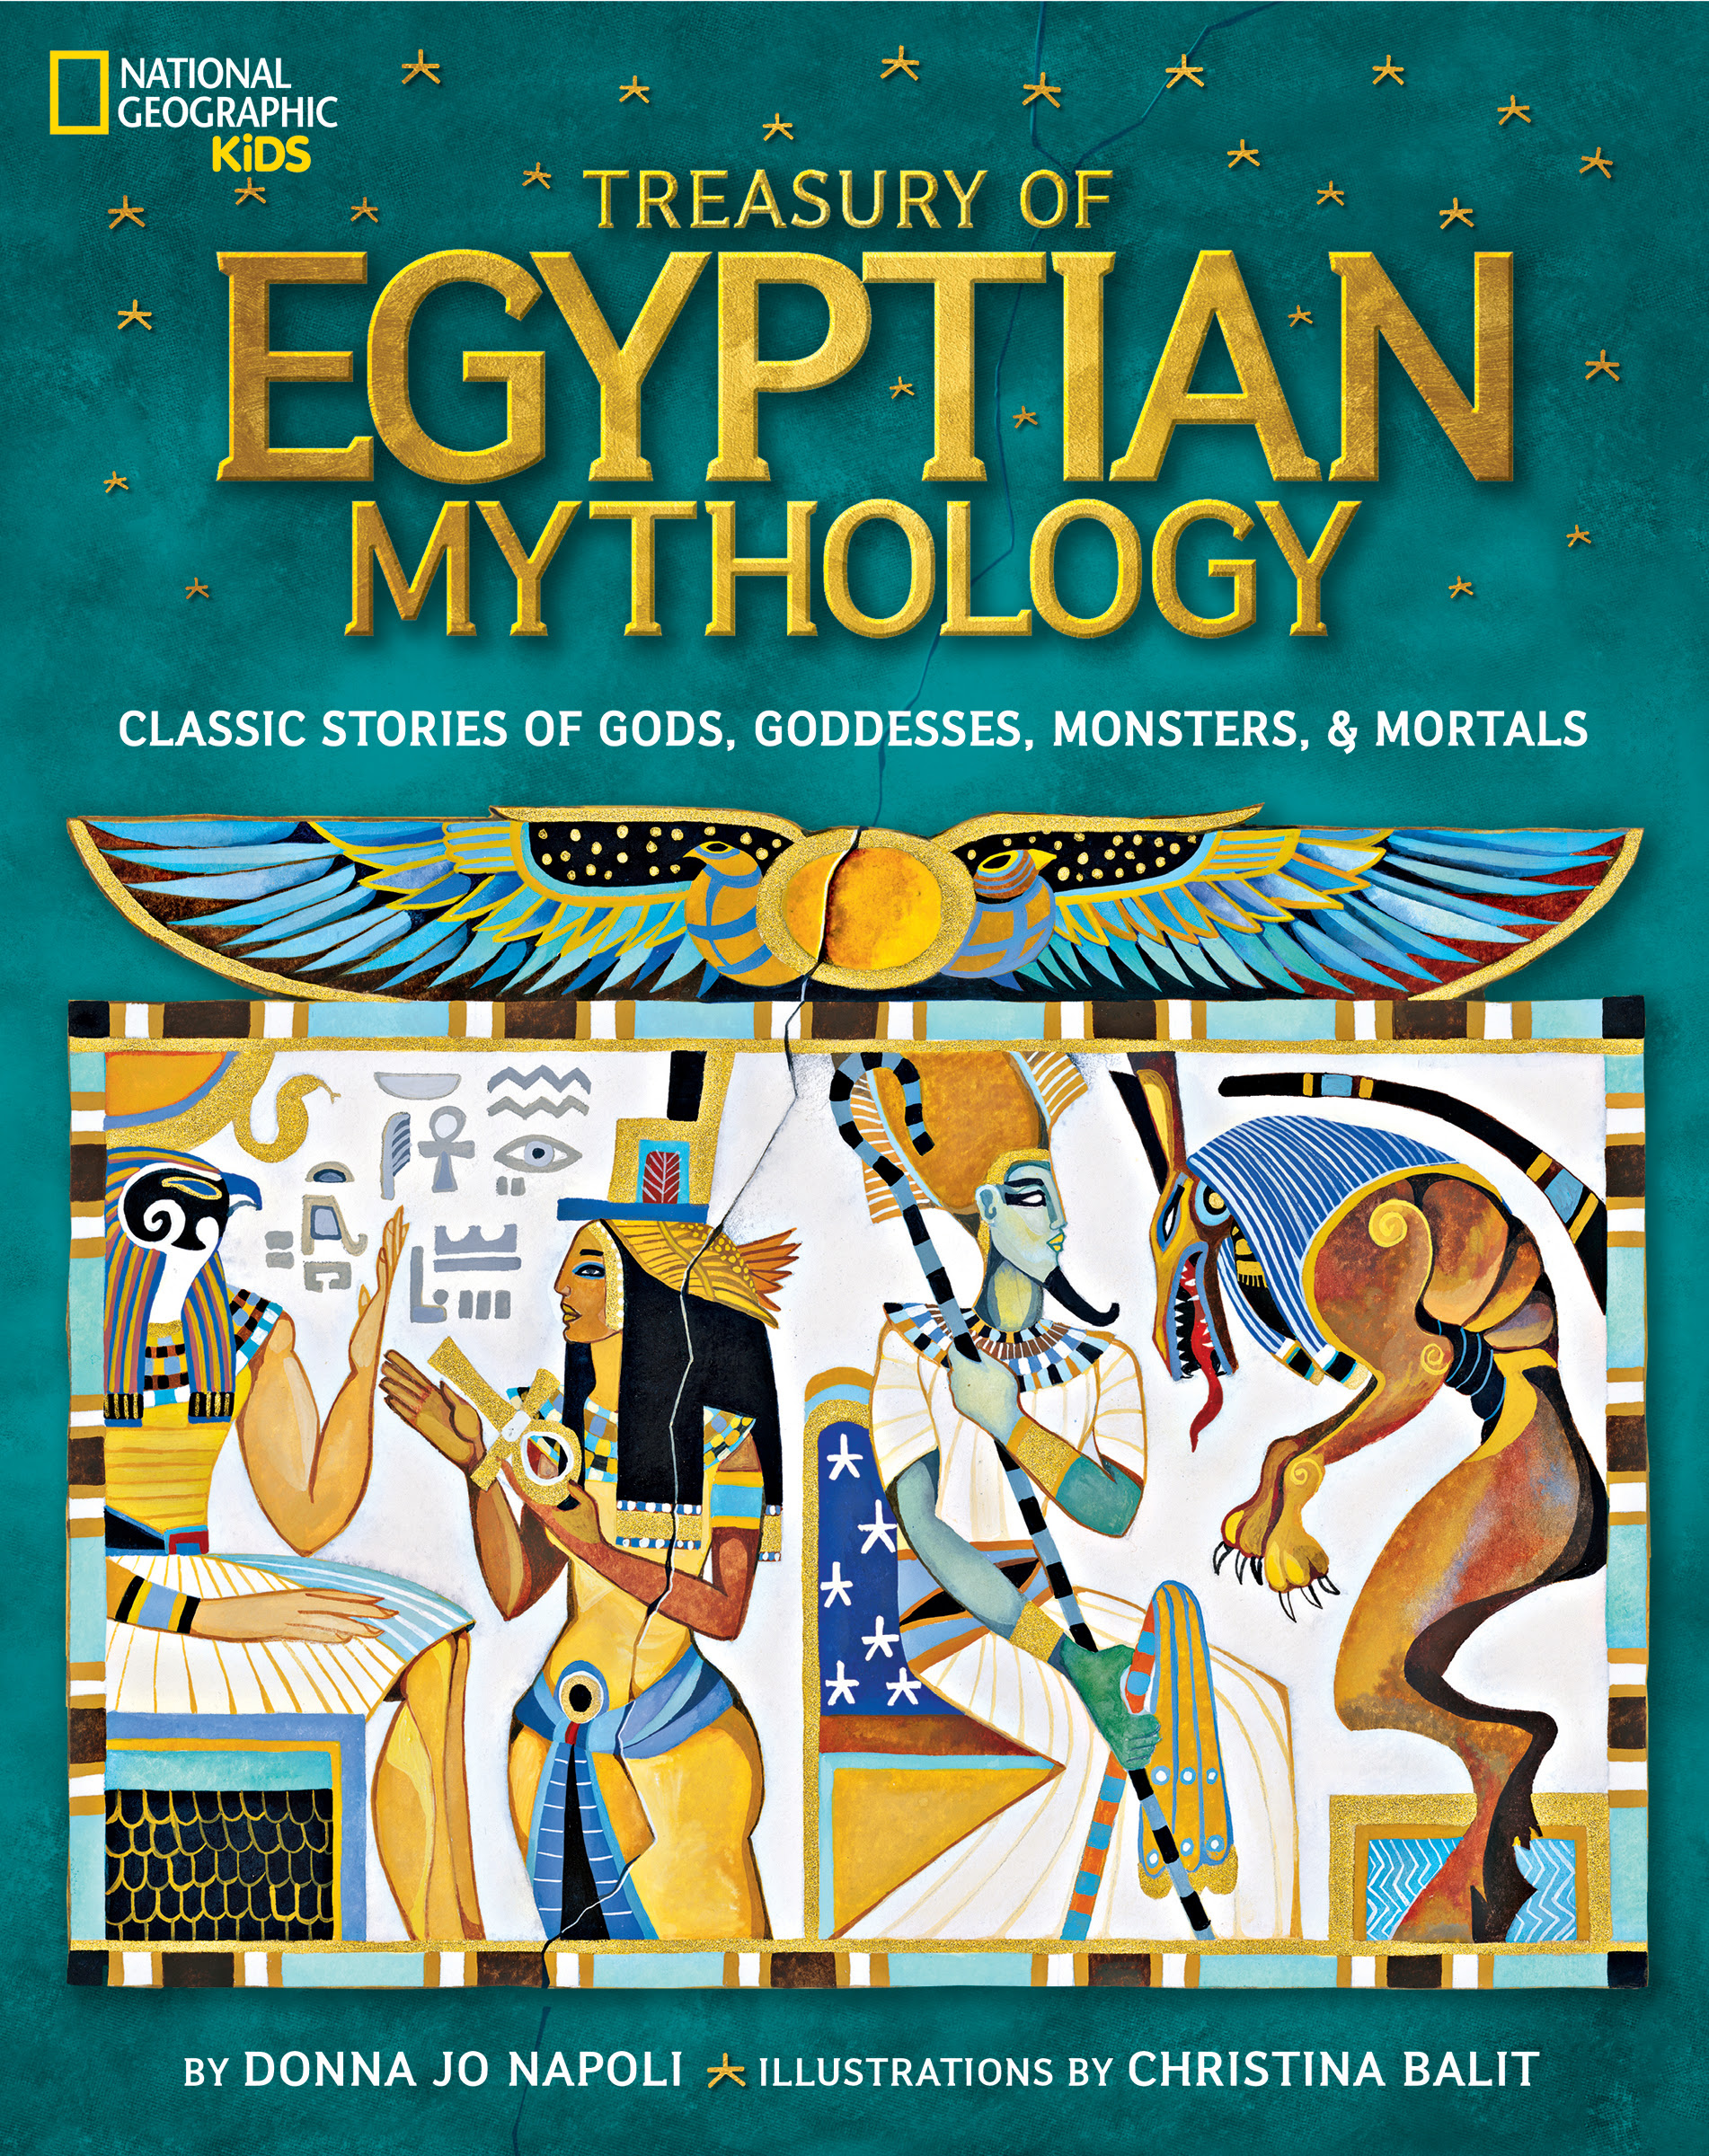 National Geographic Kids - Egyptian Mythology - MKB Birthday Party Giveaway